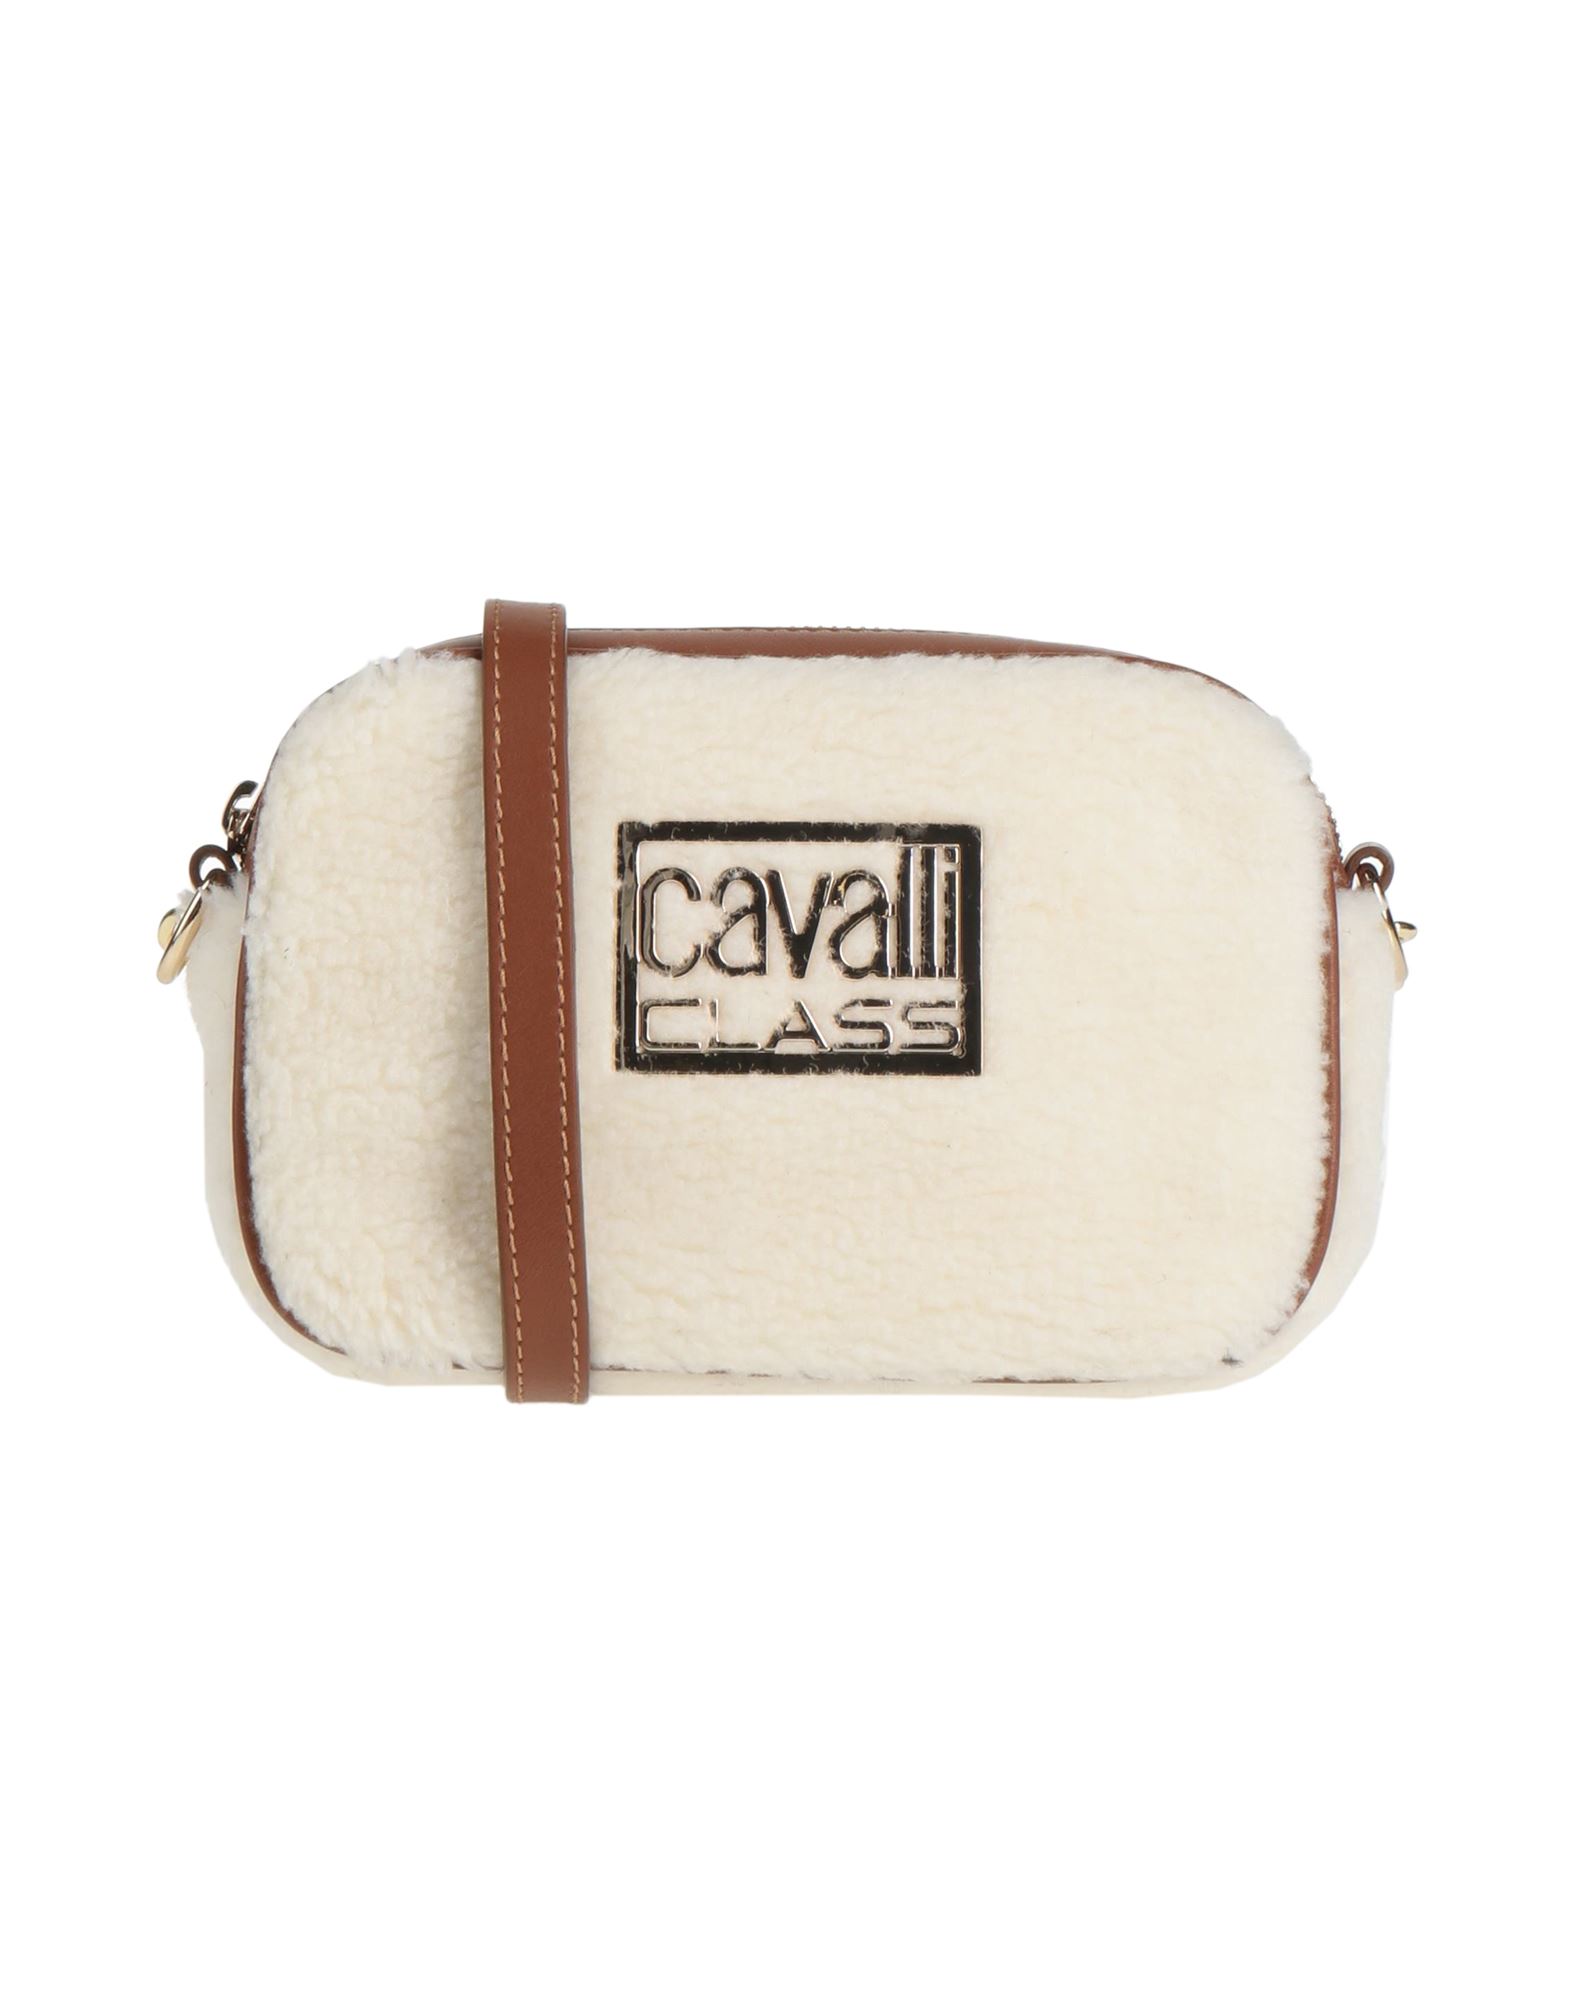 Cavalli Class Handbags In Ivory